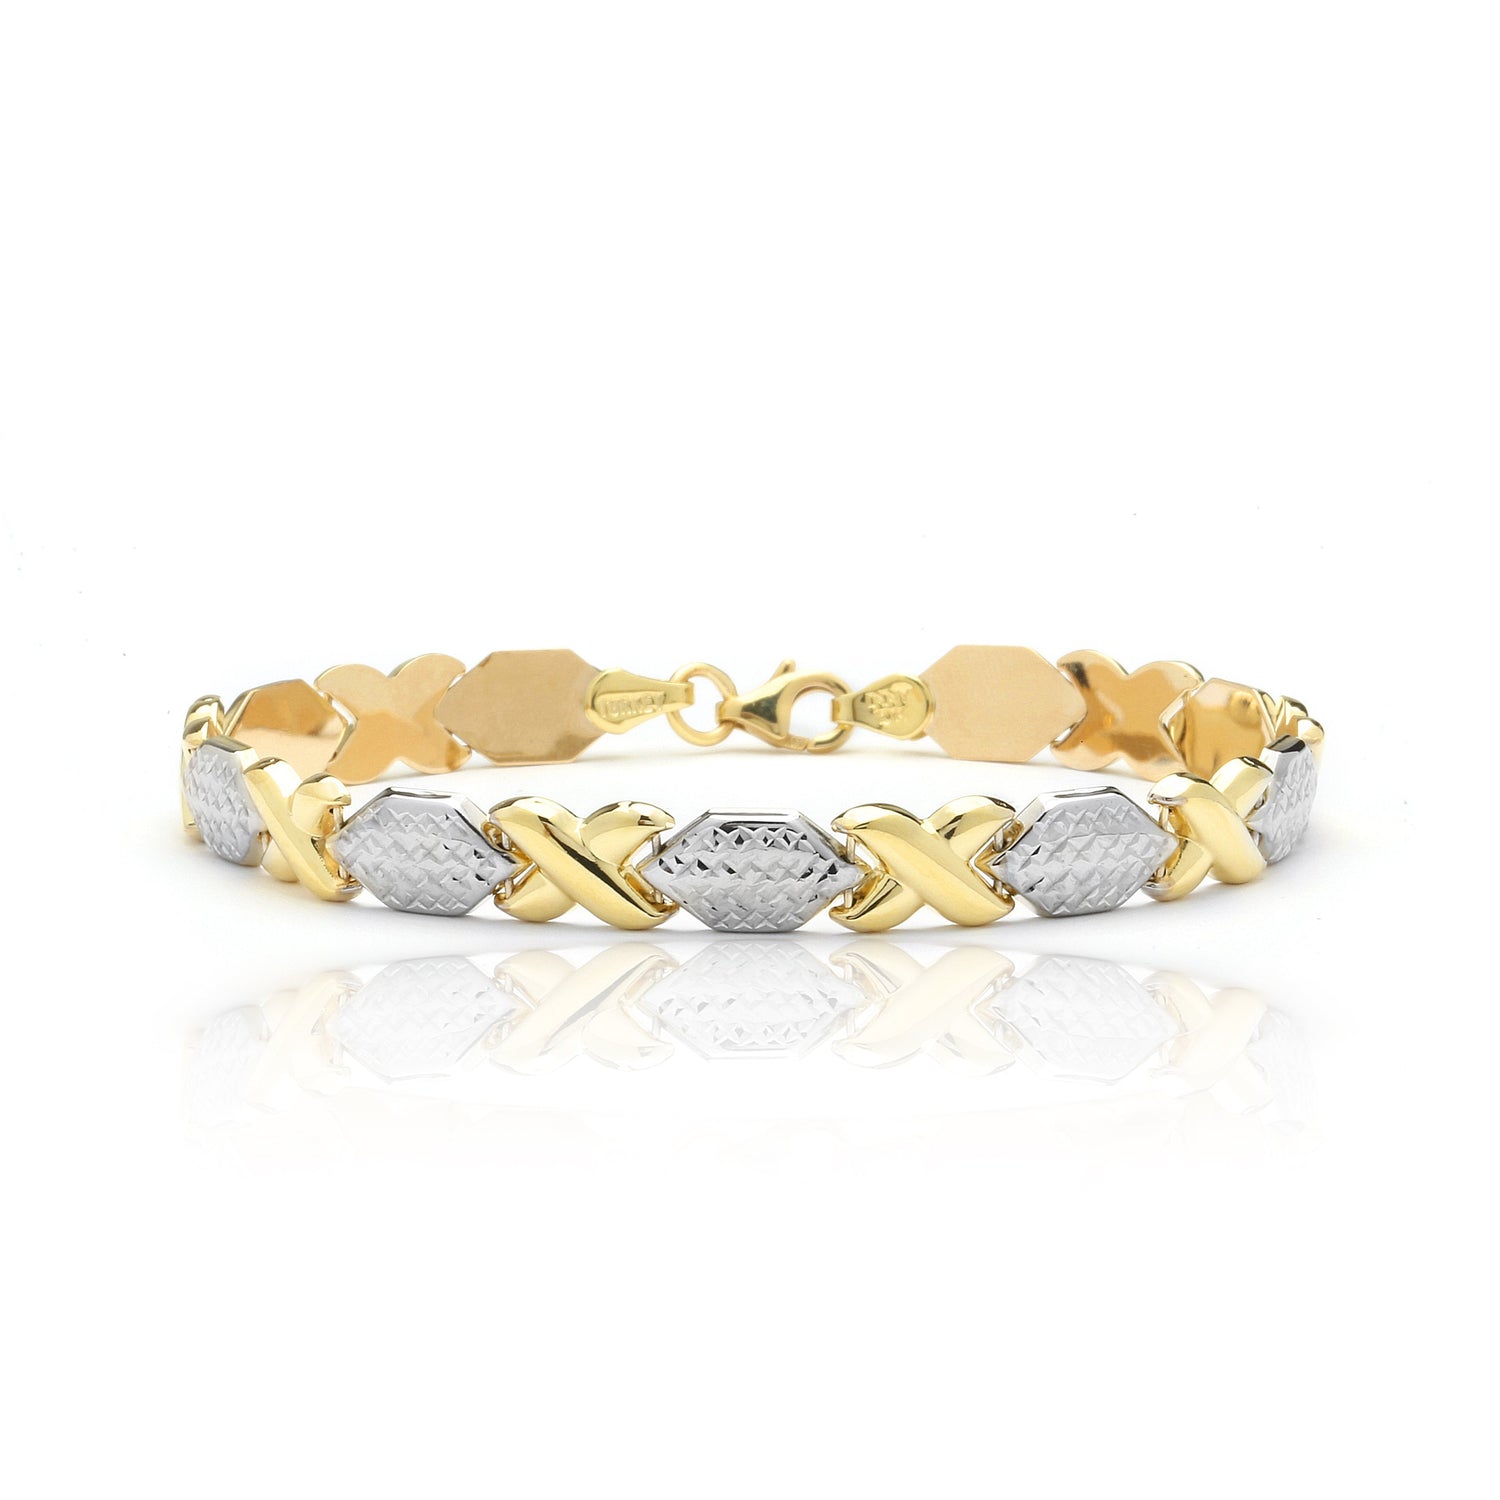 10k Fine Gold Stampato Xoxo Friendship Hugs and Kisses Chain Bracelet